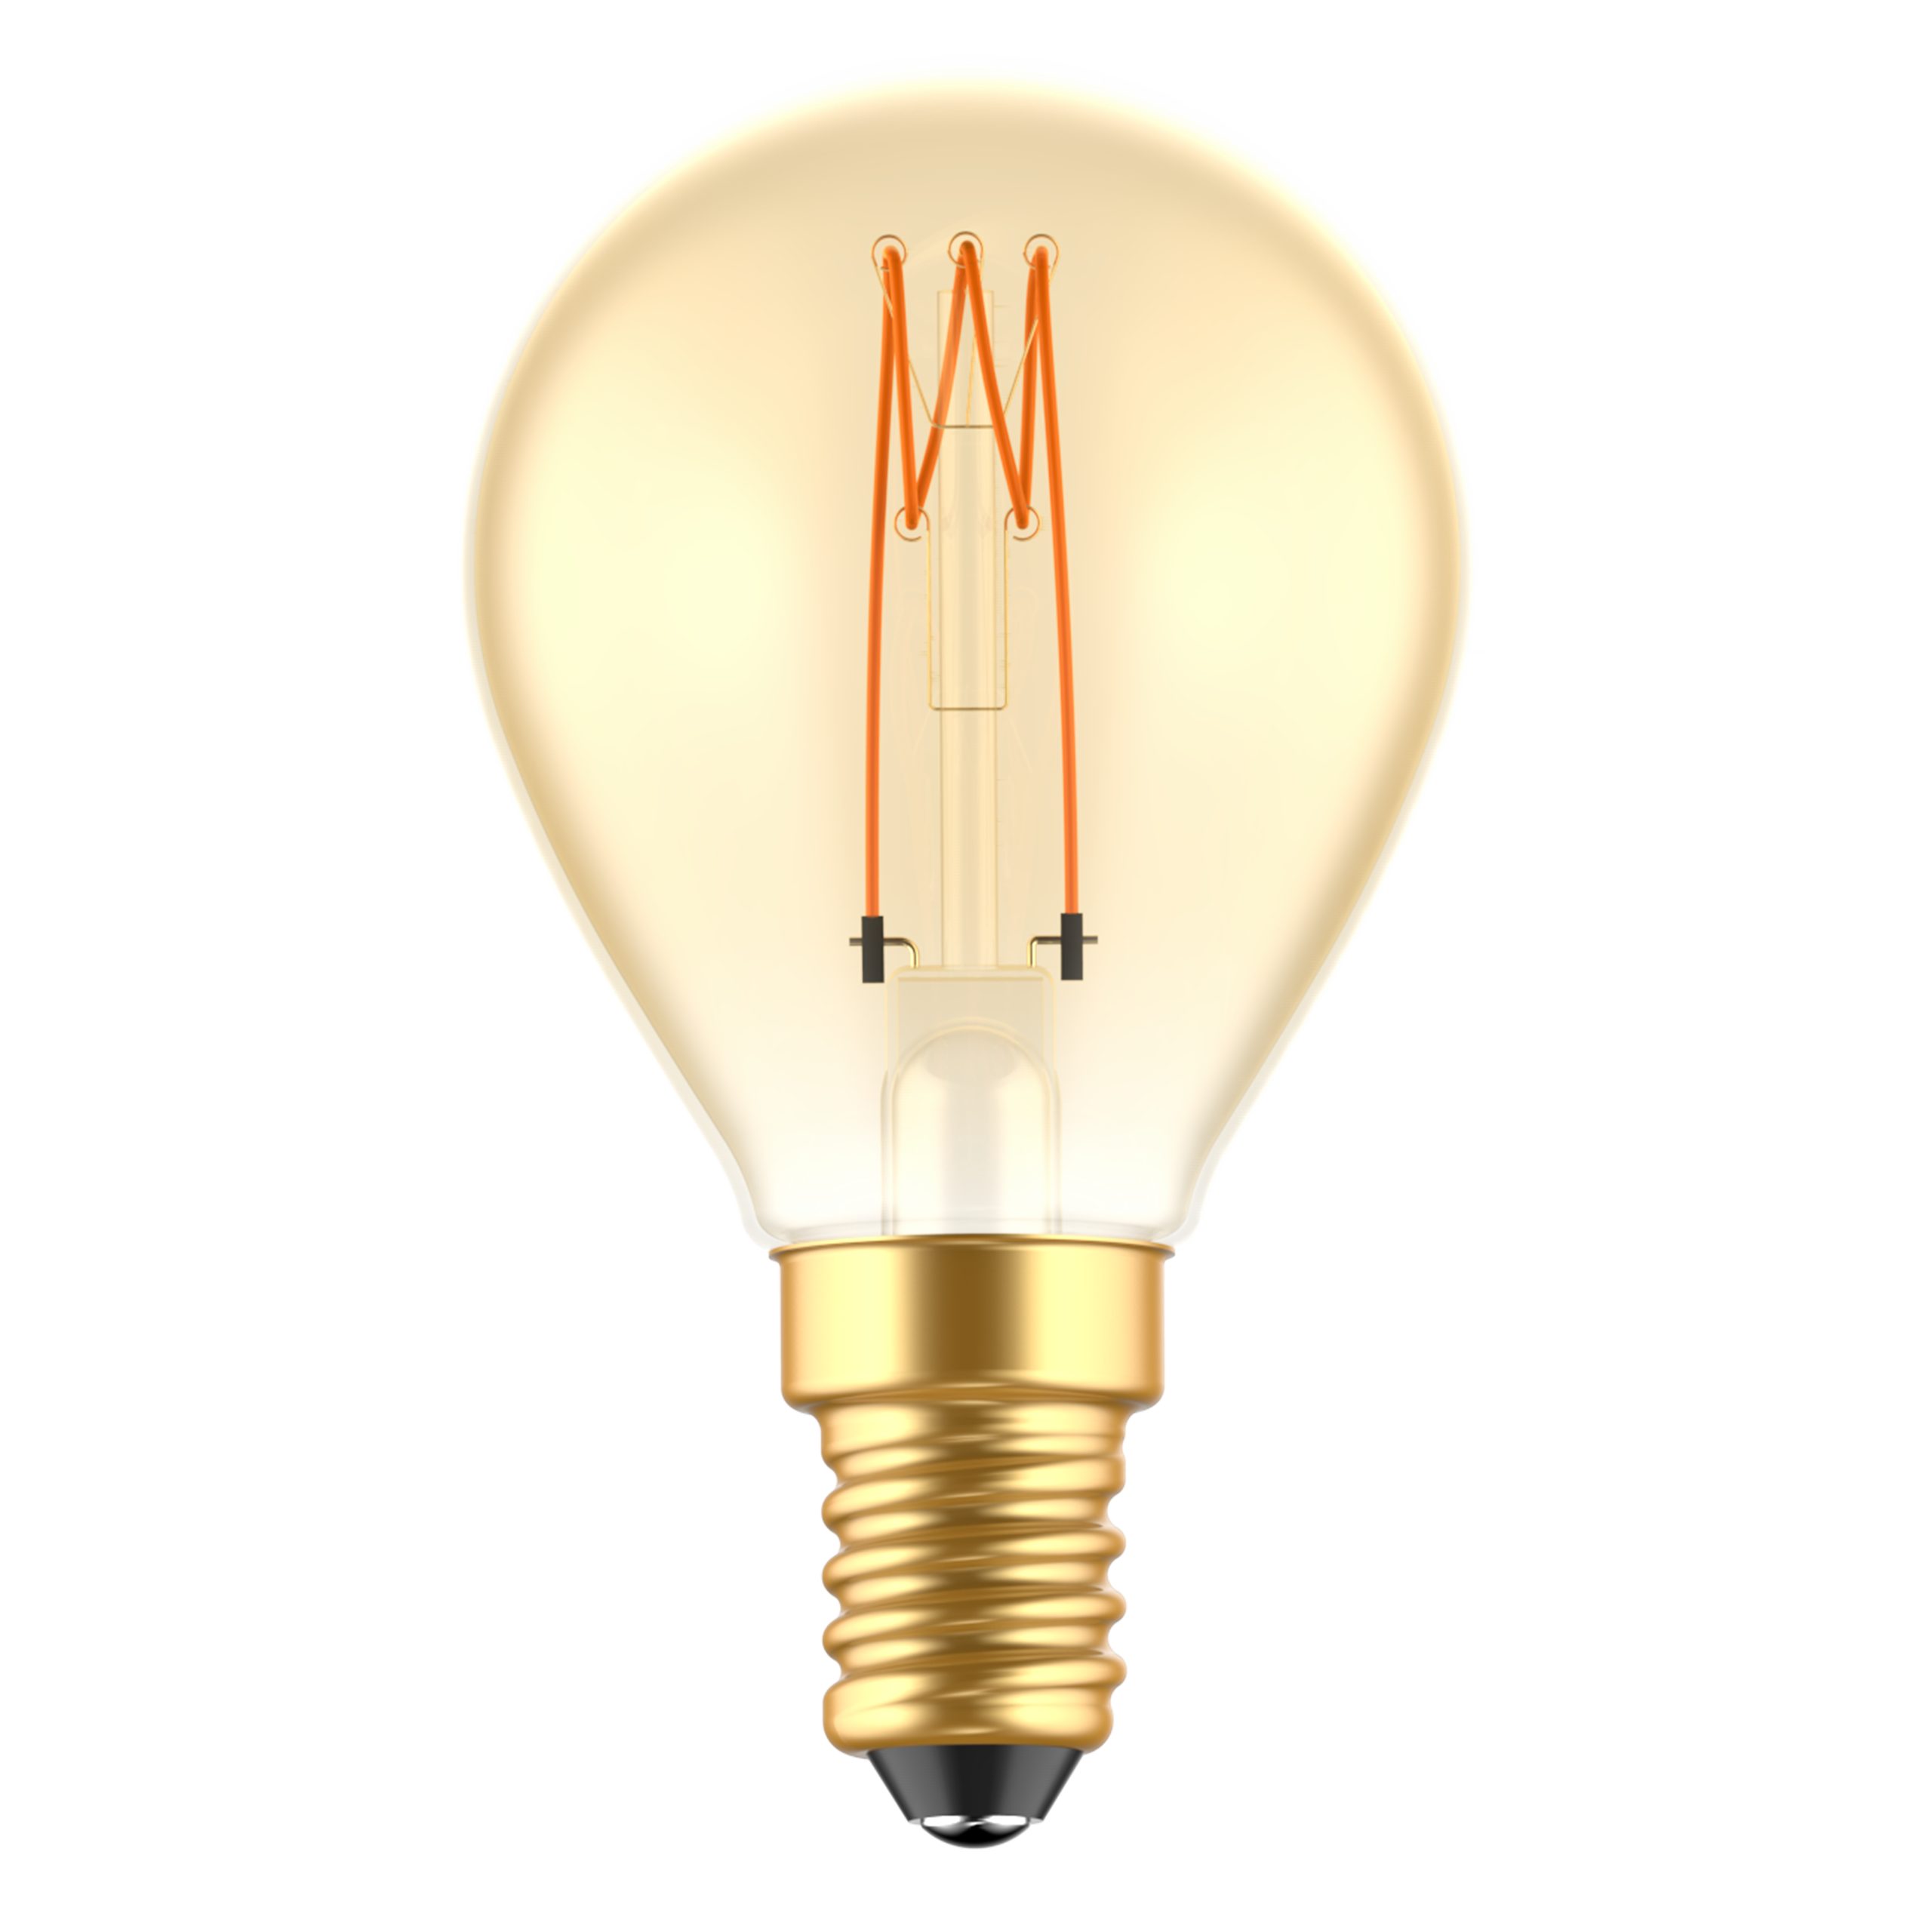 LED's light LED-Leuchtmittel 0620190 G45 2.5W E14, Gold extra-warmweiß LED dimmbar E14 Kugel